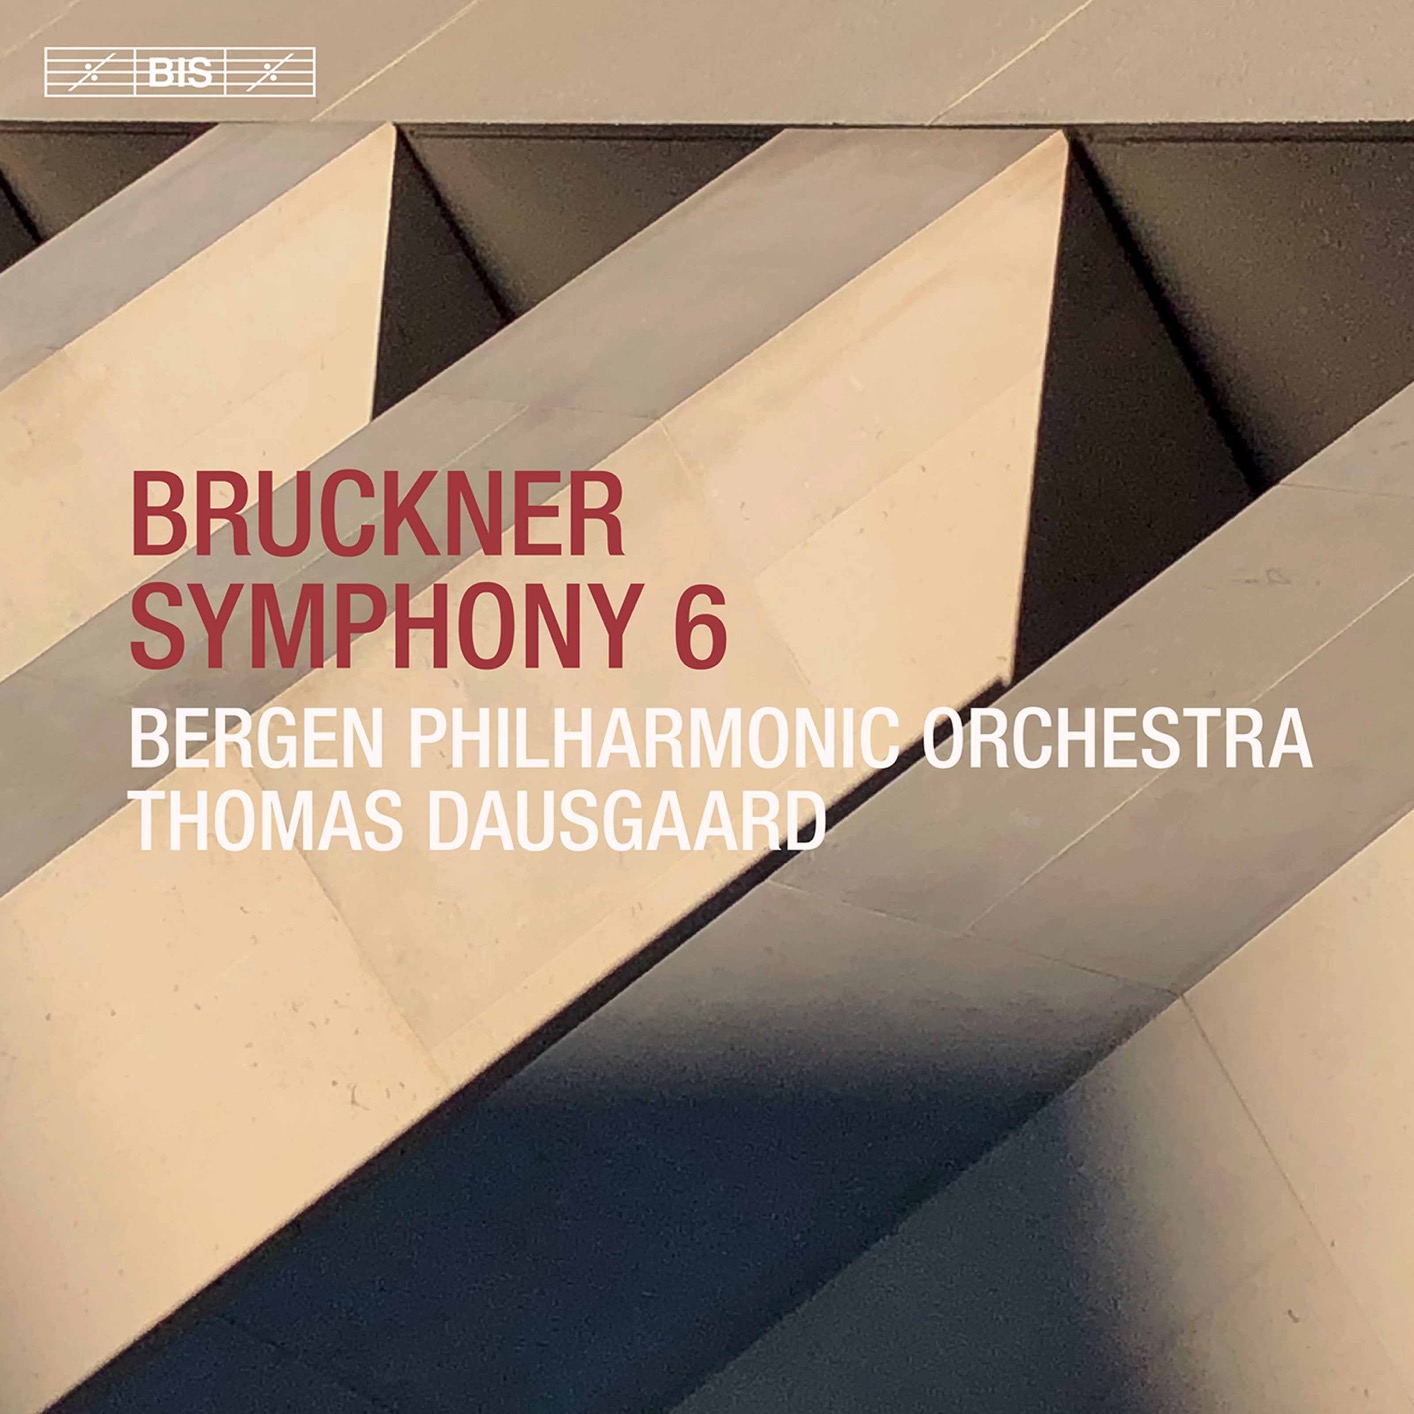 Bergen Philharmonic Orchestra & Thomas Dausgaard - Bruckner: Symphony No. 6 in A Major, WAB 106 (1881 Version) (2020) [FLAC 24bit/96kHz]